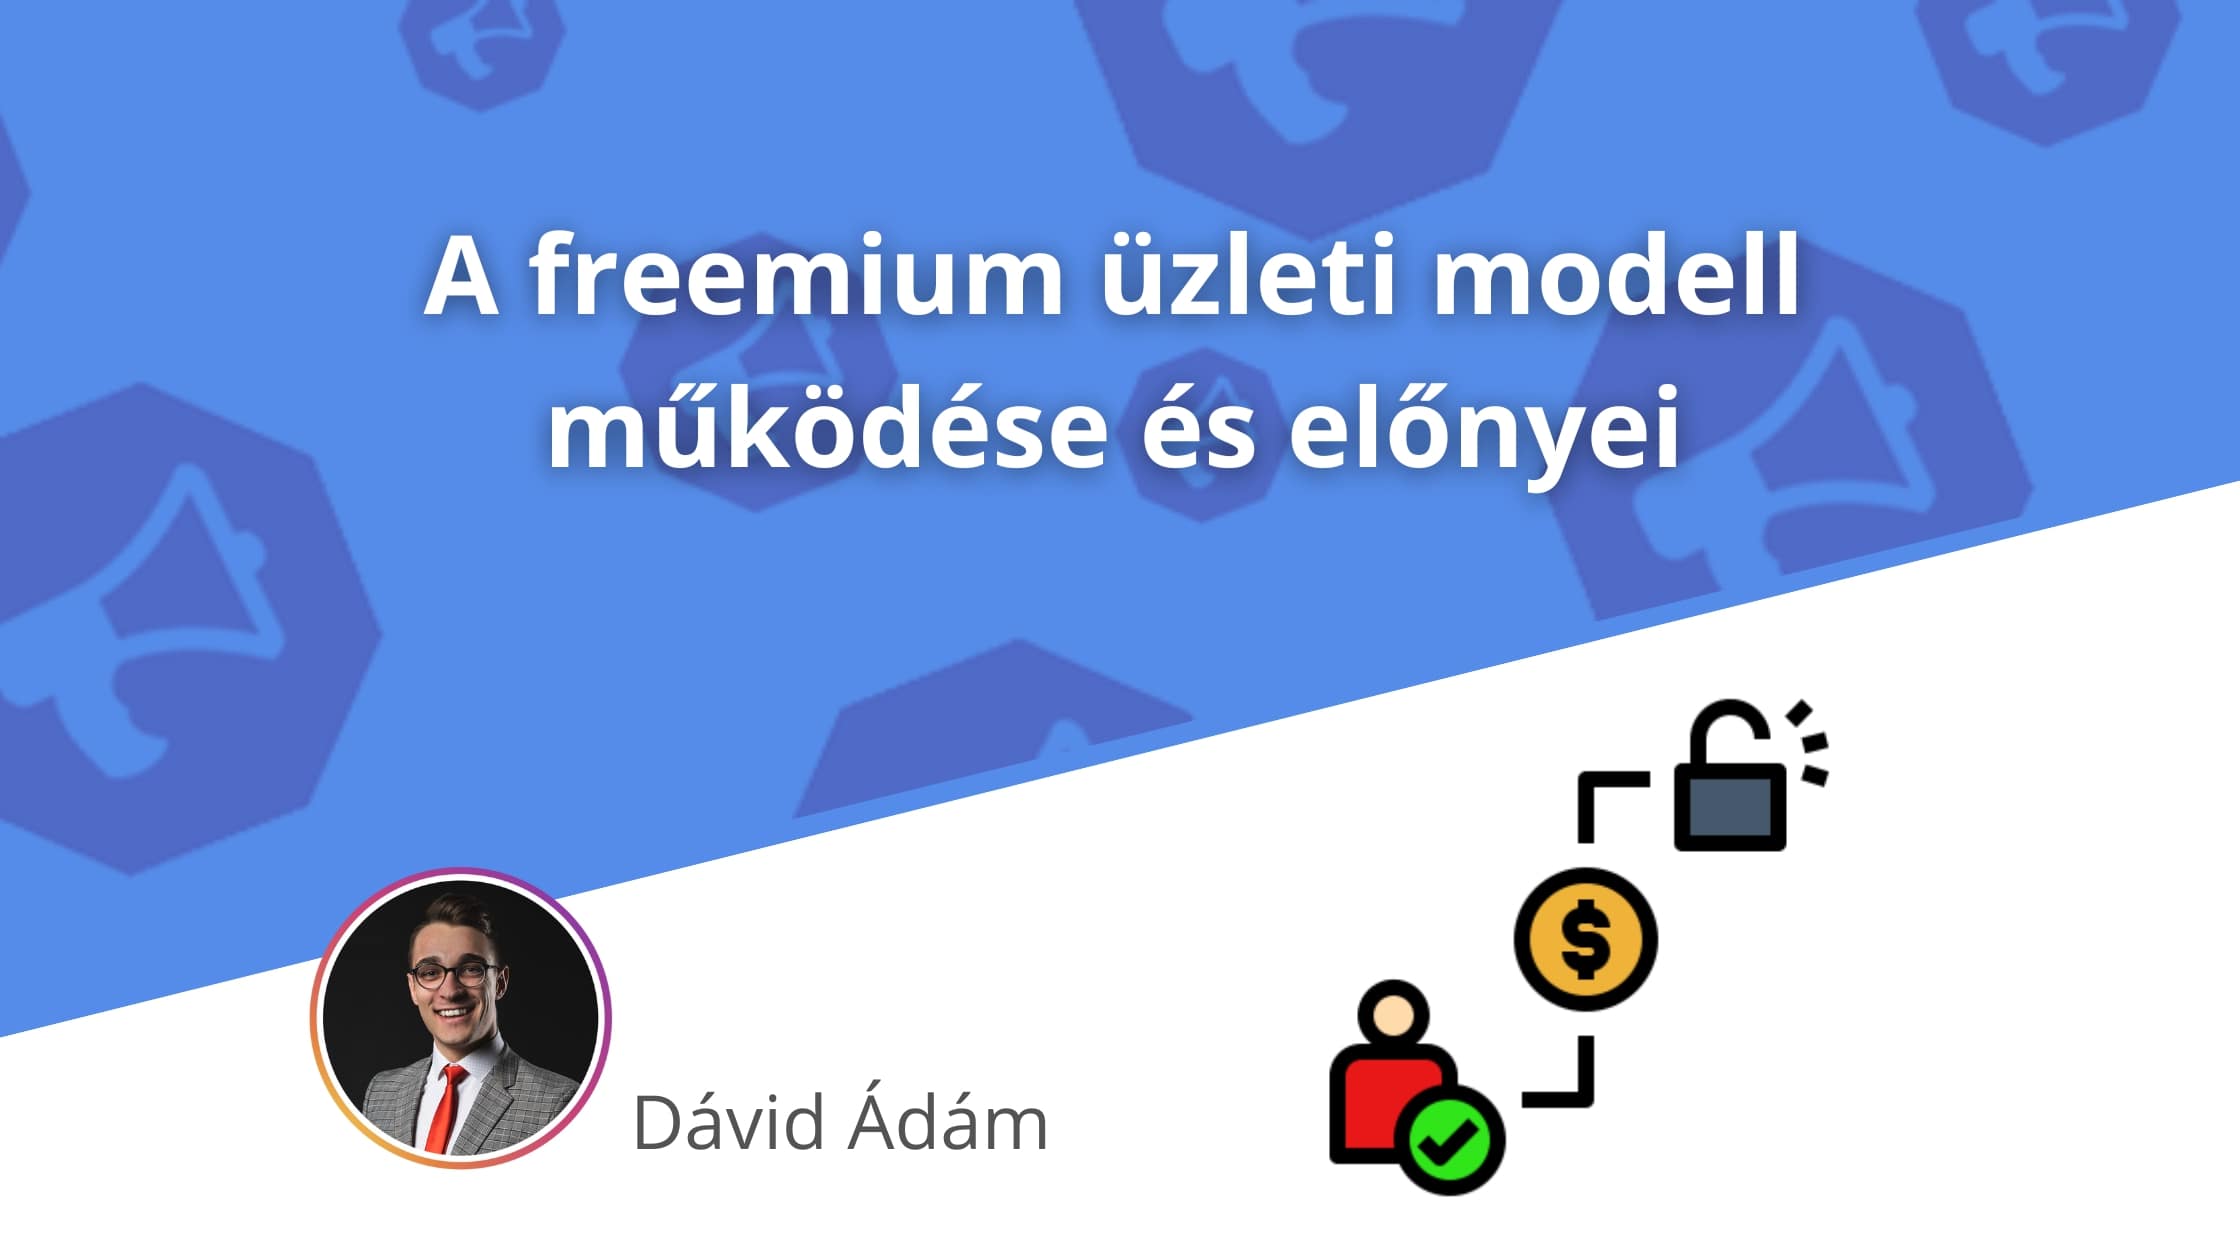 Freemium üzleti modell